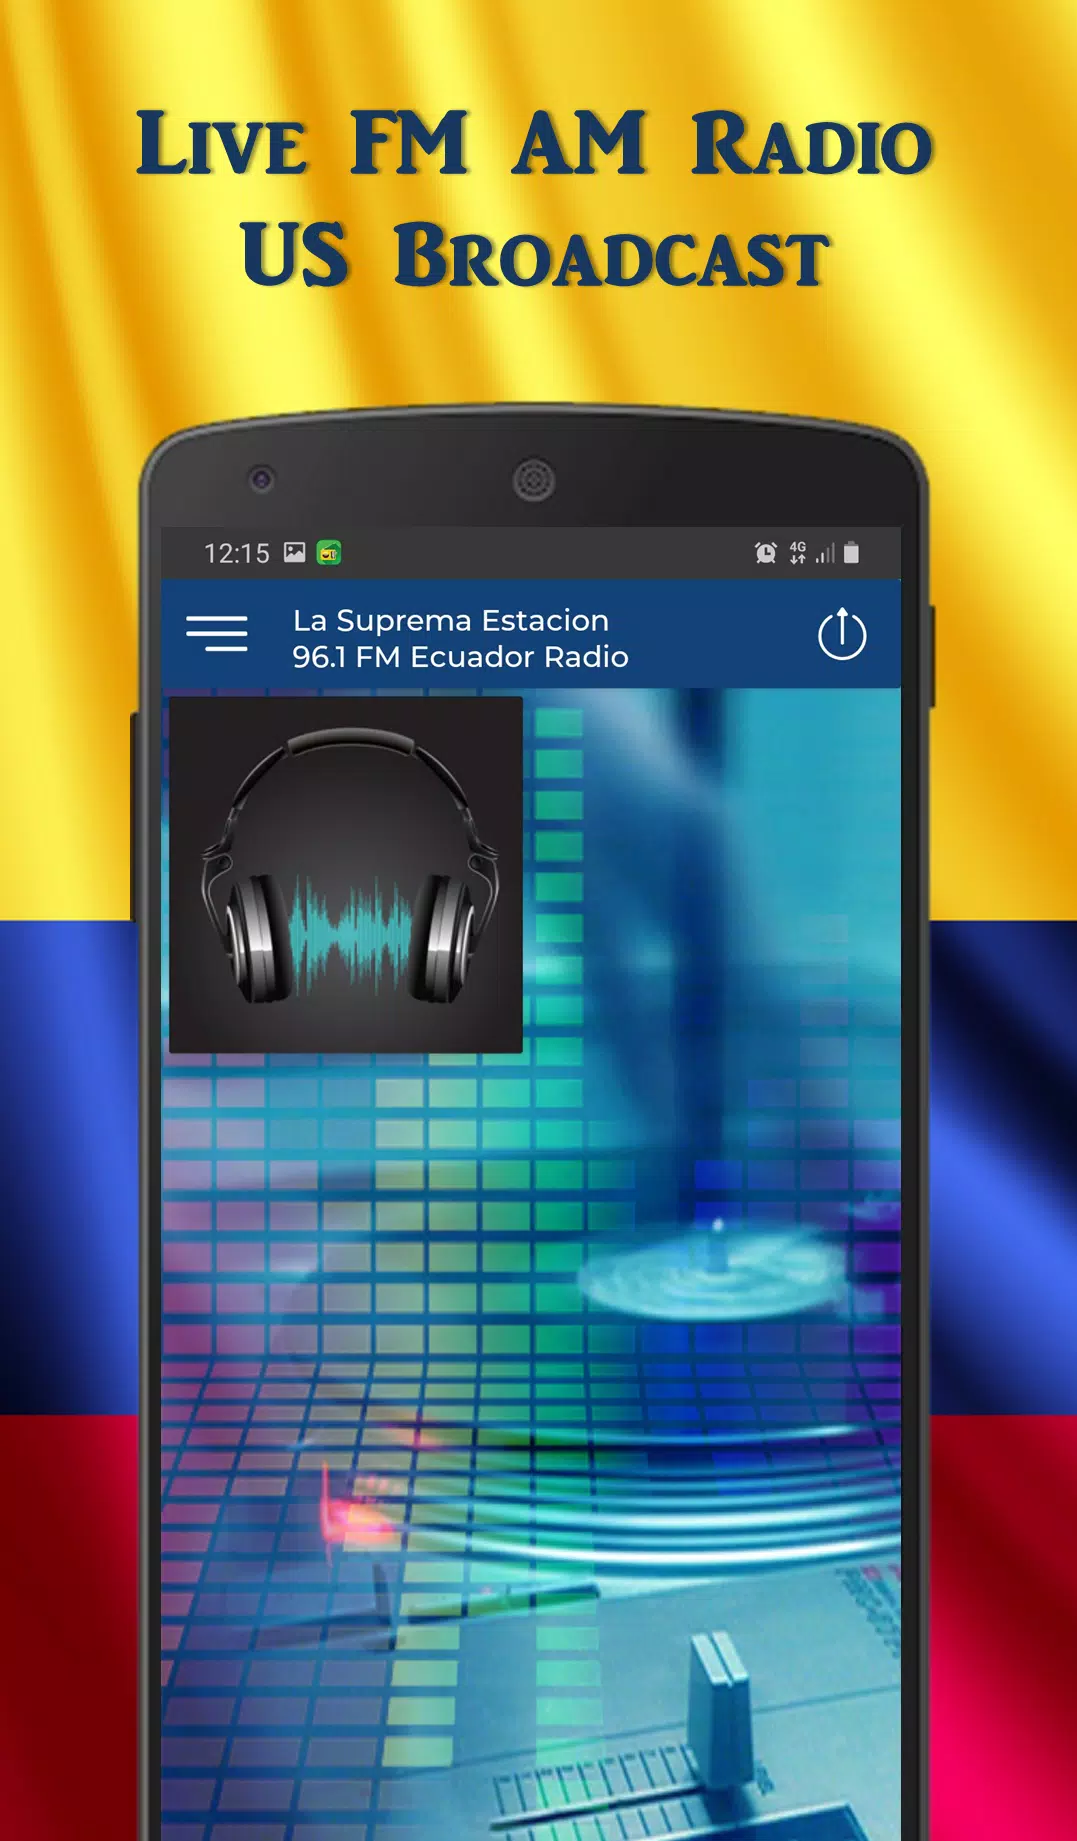 La Suprema Estacion 96.1 FM - Ecuador Radio Online APK per Android Download